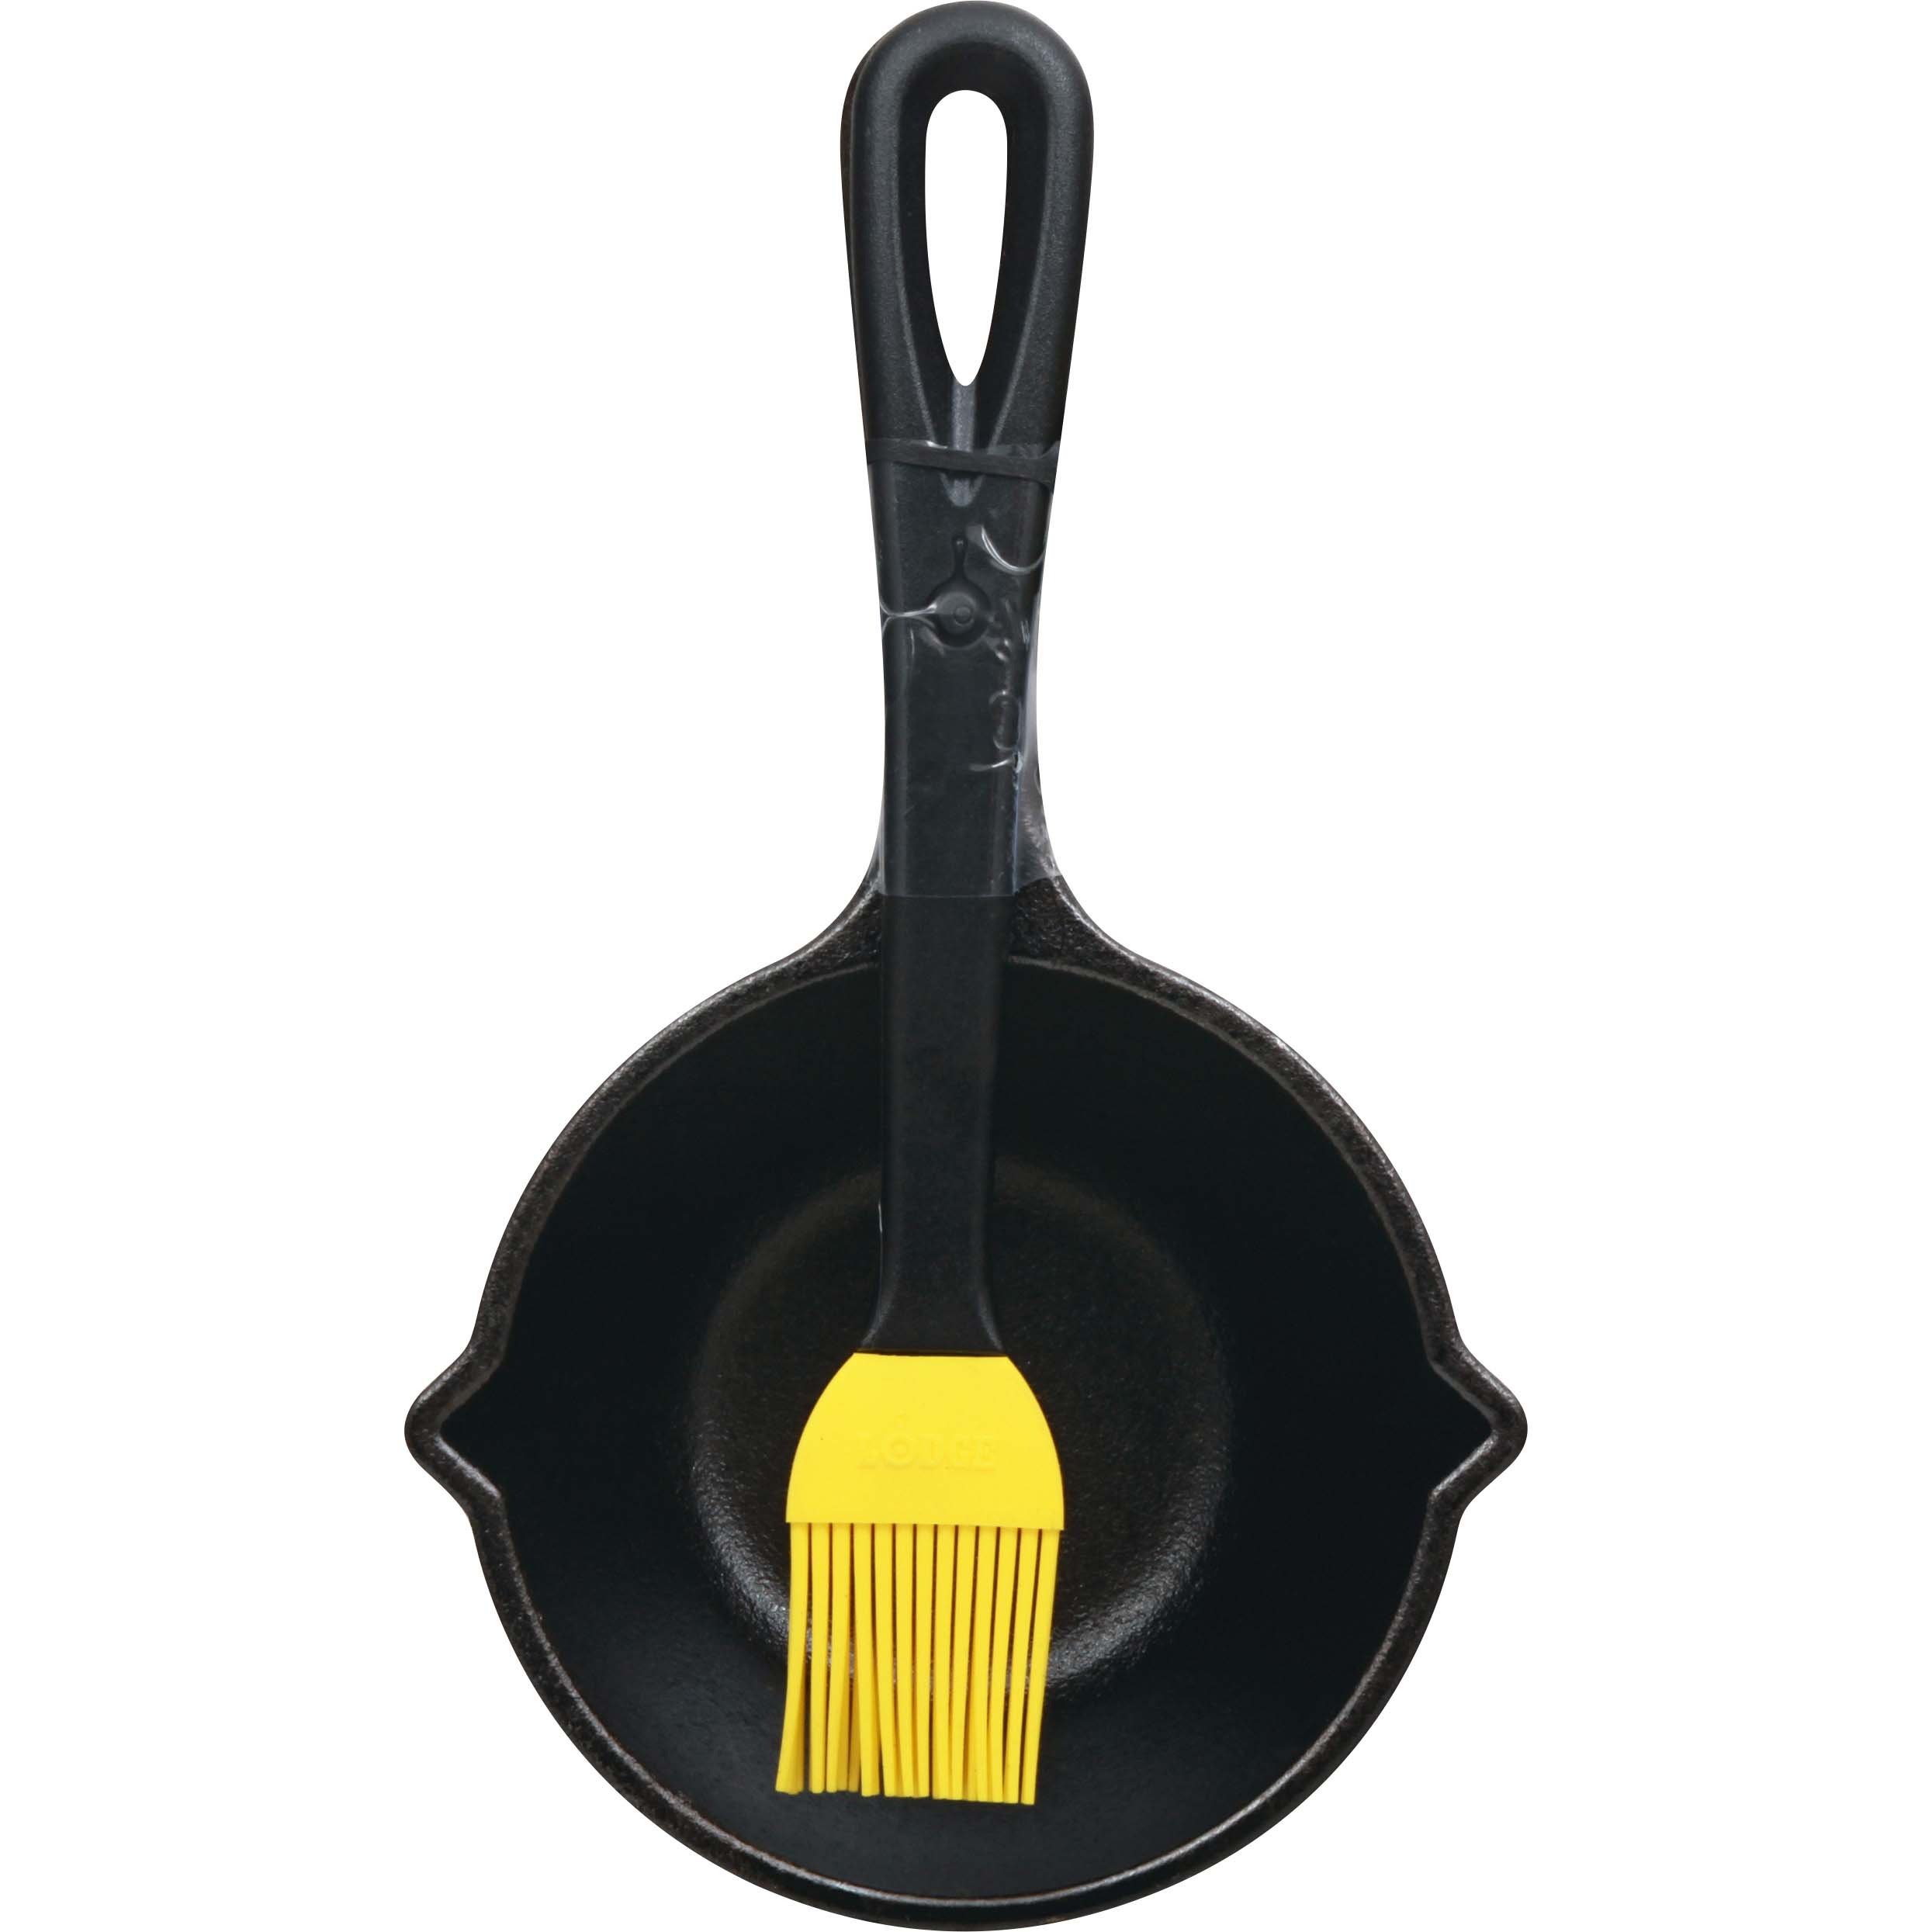  Lodge Cast Iron Silicone Brush Melting Pot, 15.2 oz, Black :  Patio, Lawn & Garden